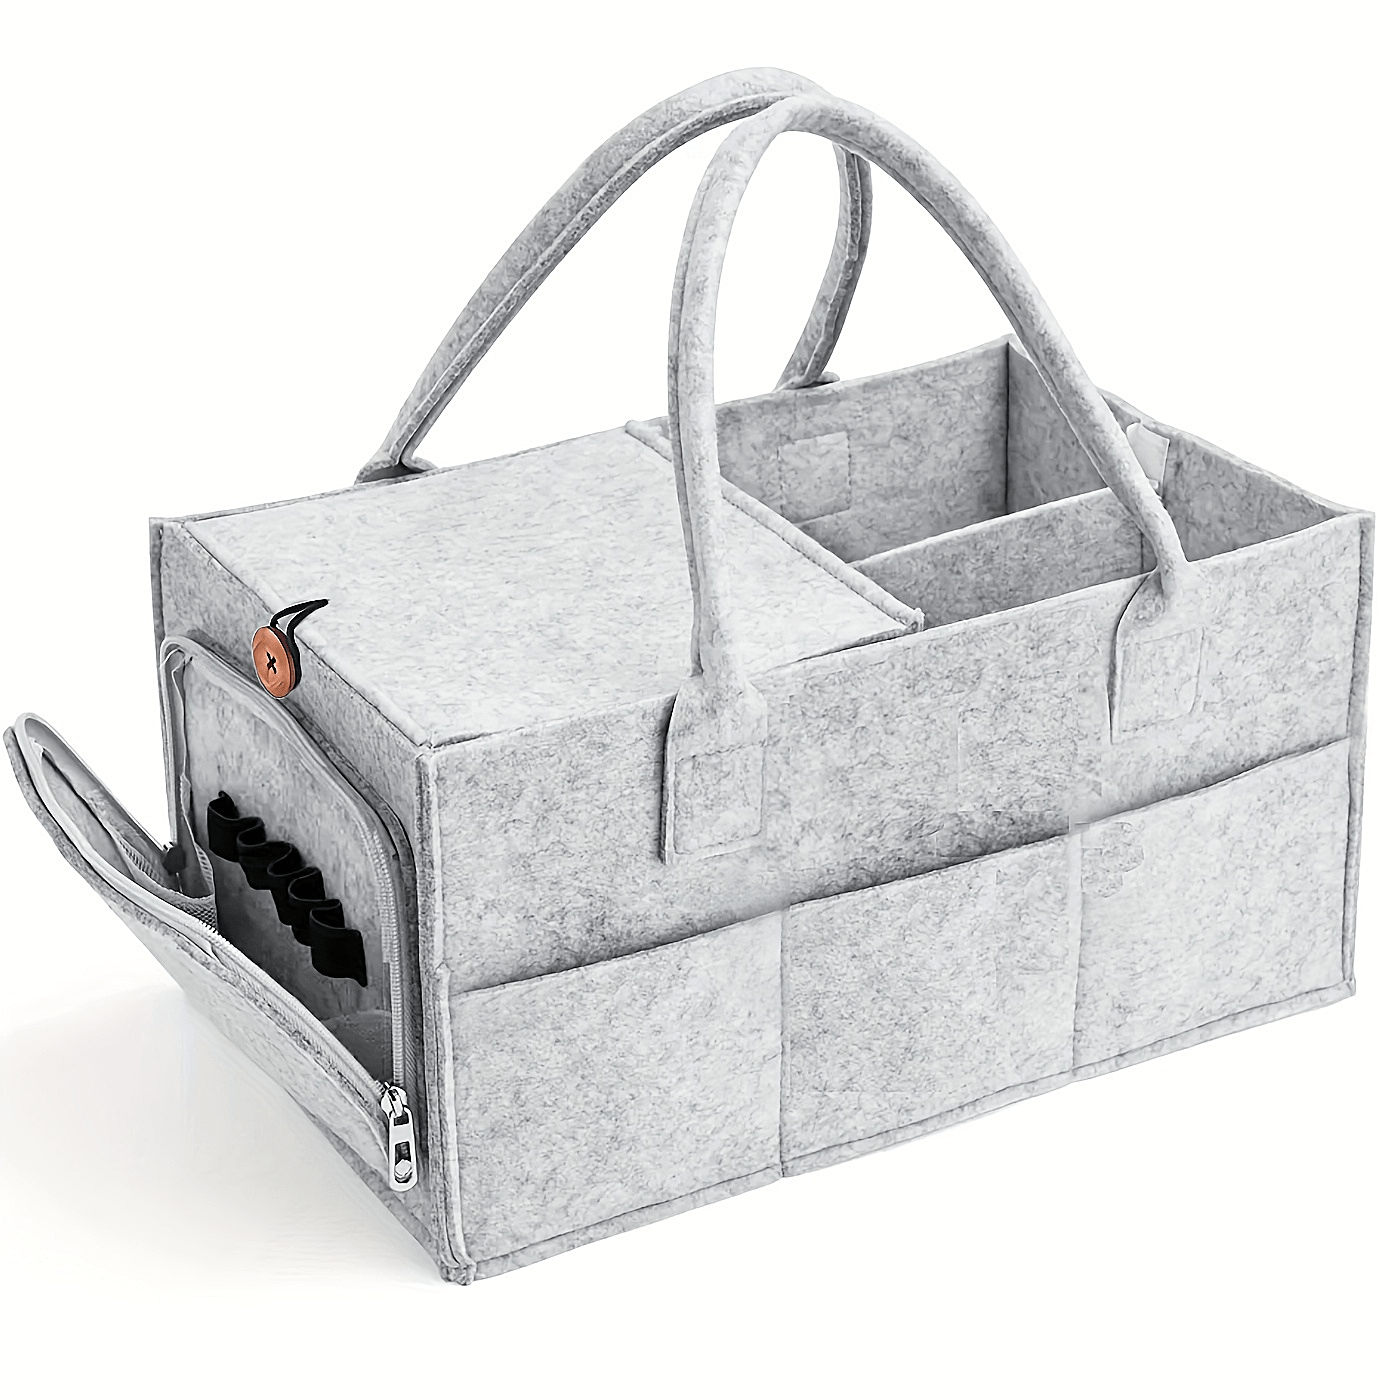 Diaper Caddy Organizer Baby Nursery Storage Basket with Zipper Lid